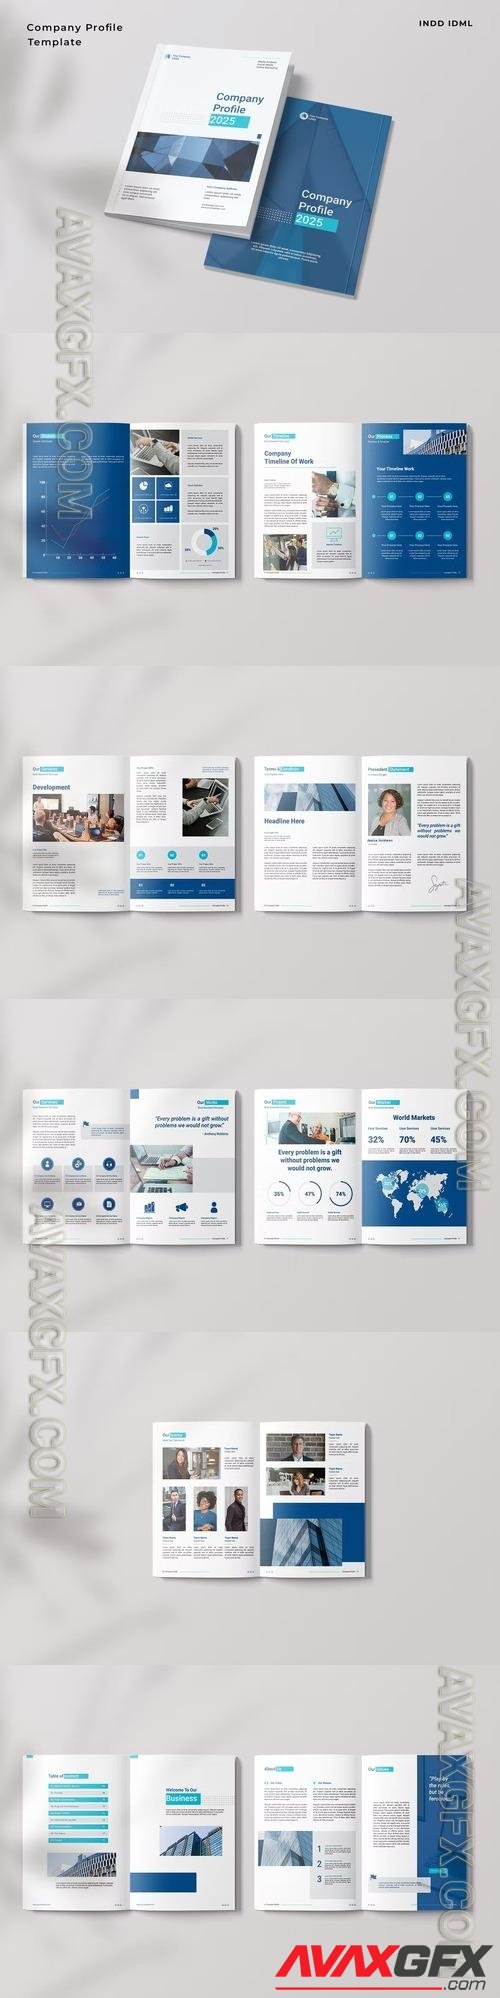 Business Company Profile Magazine KAZPS3U